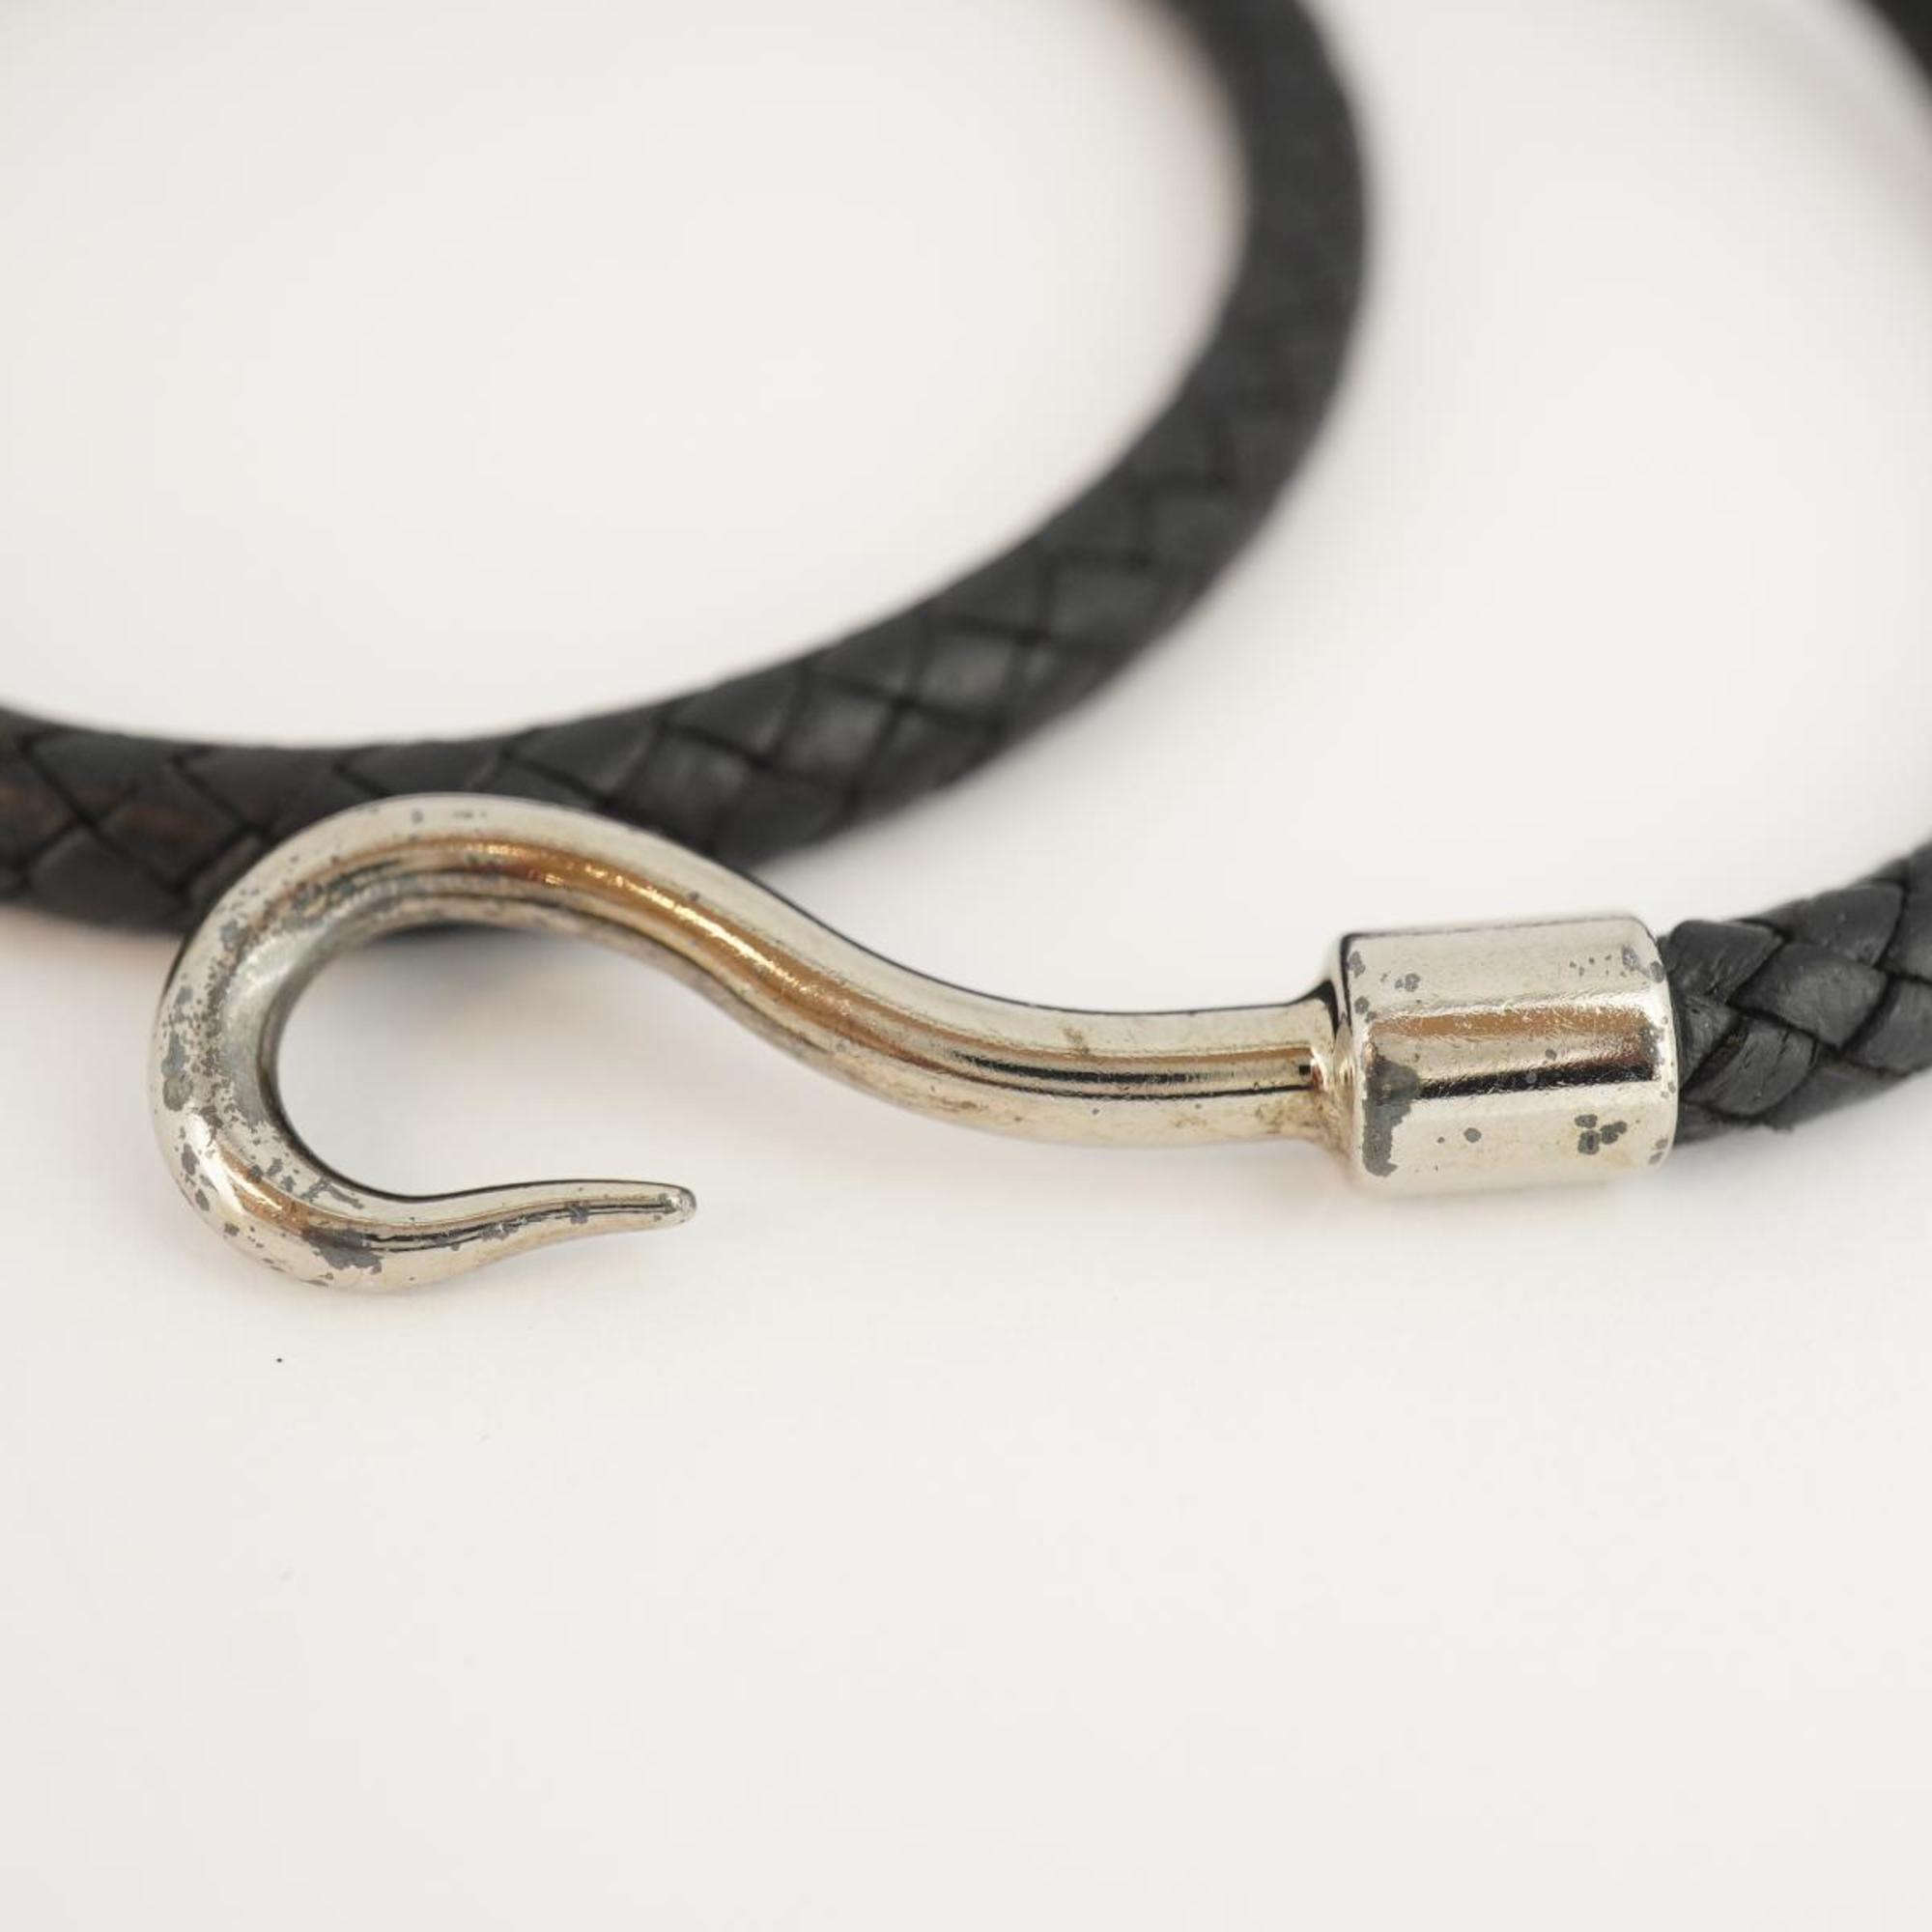 Hermes Bracelet Jumbo Hook Metal Material Leather Silver Black Men Women